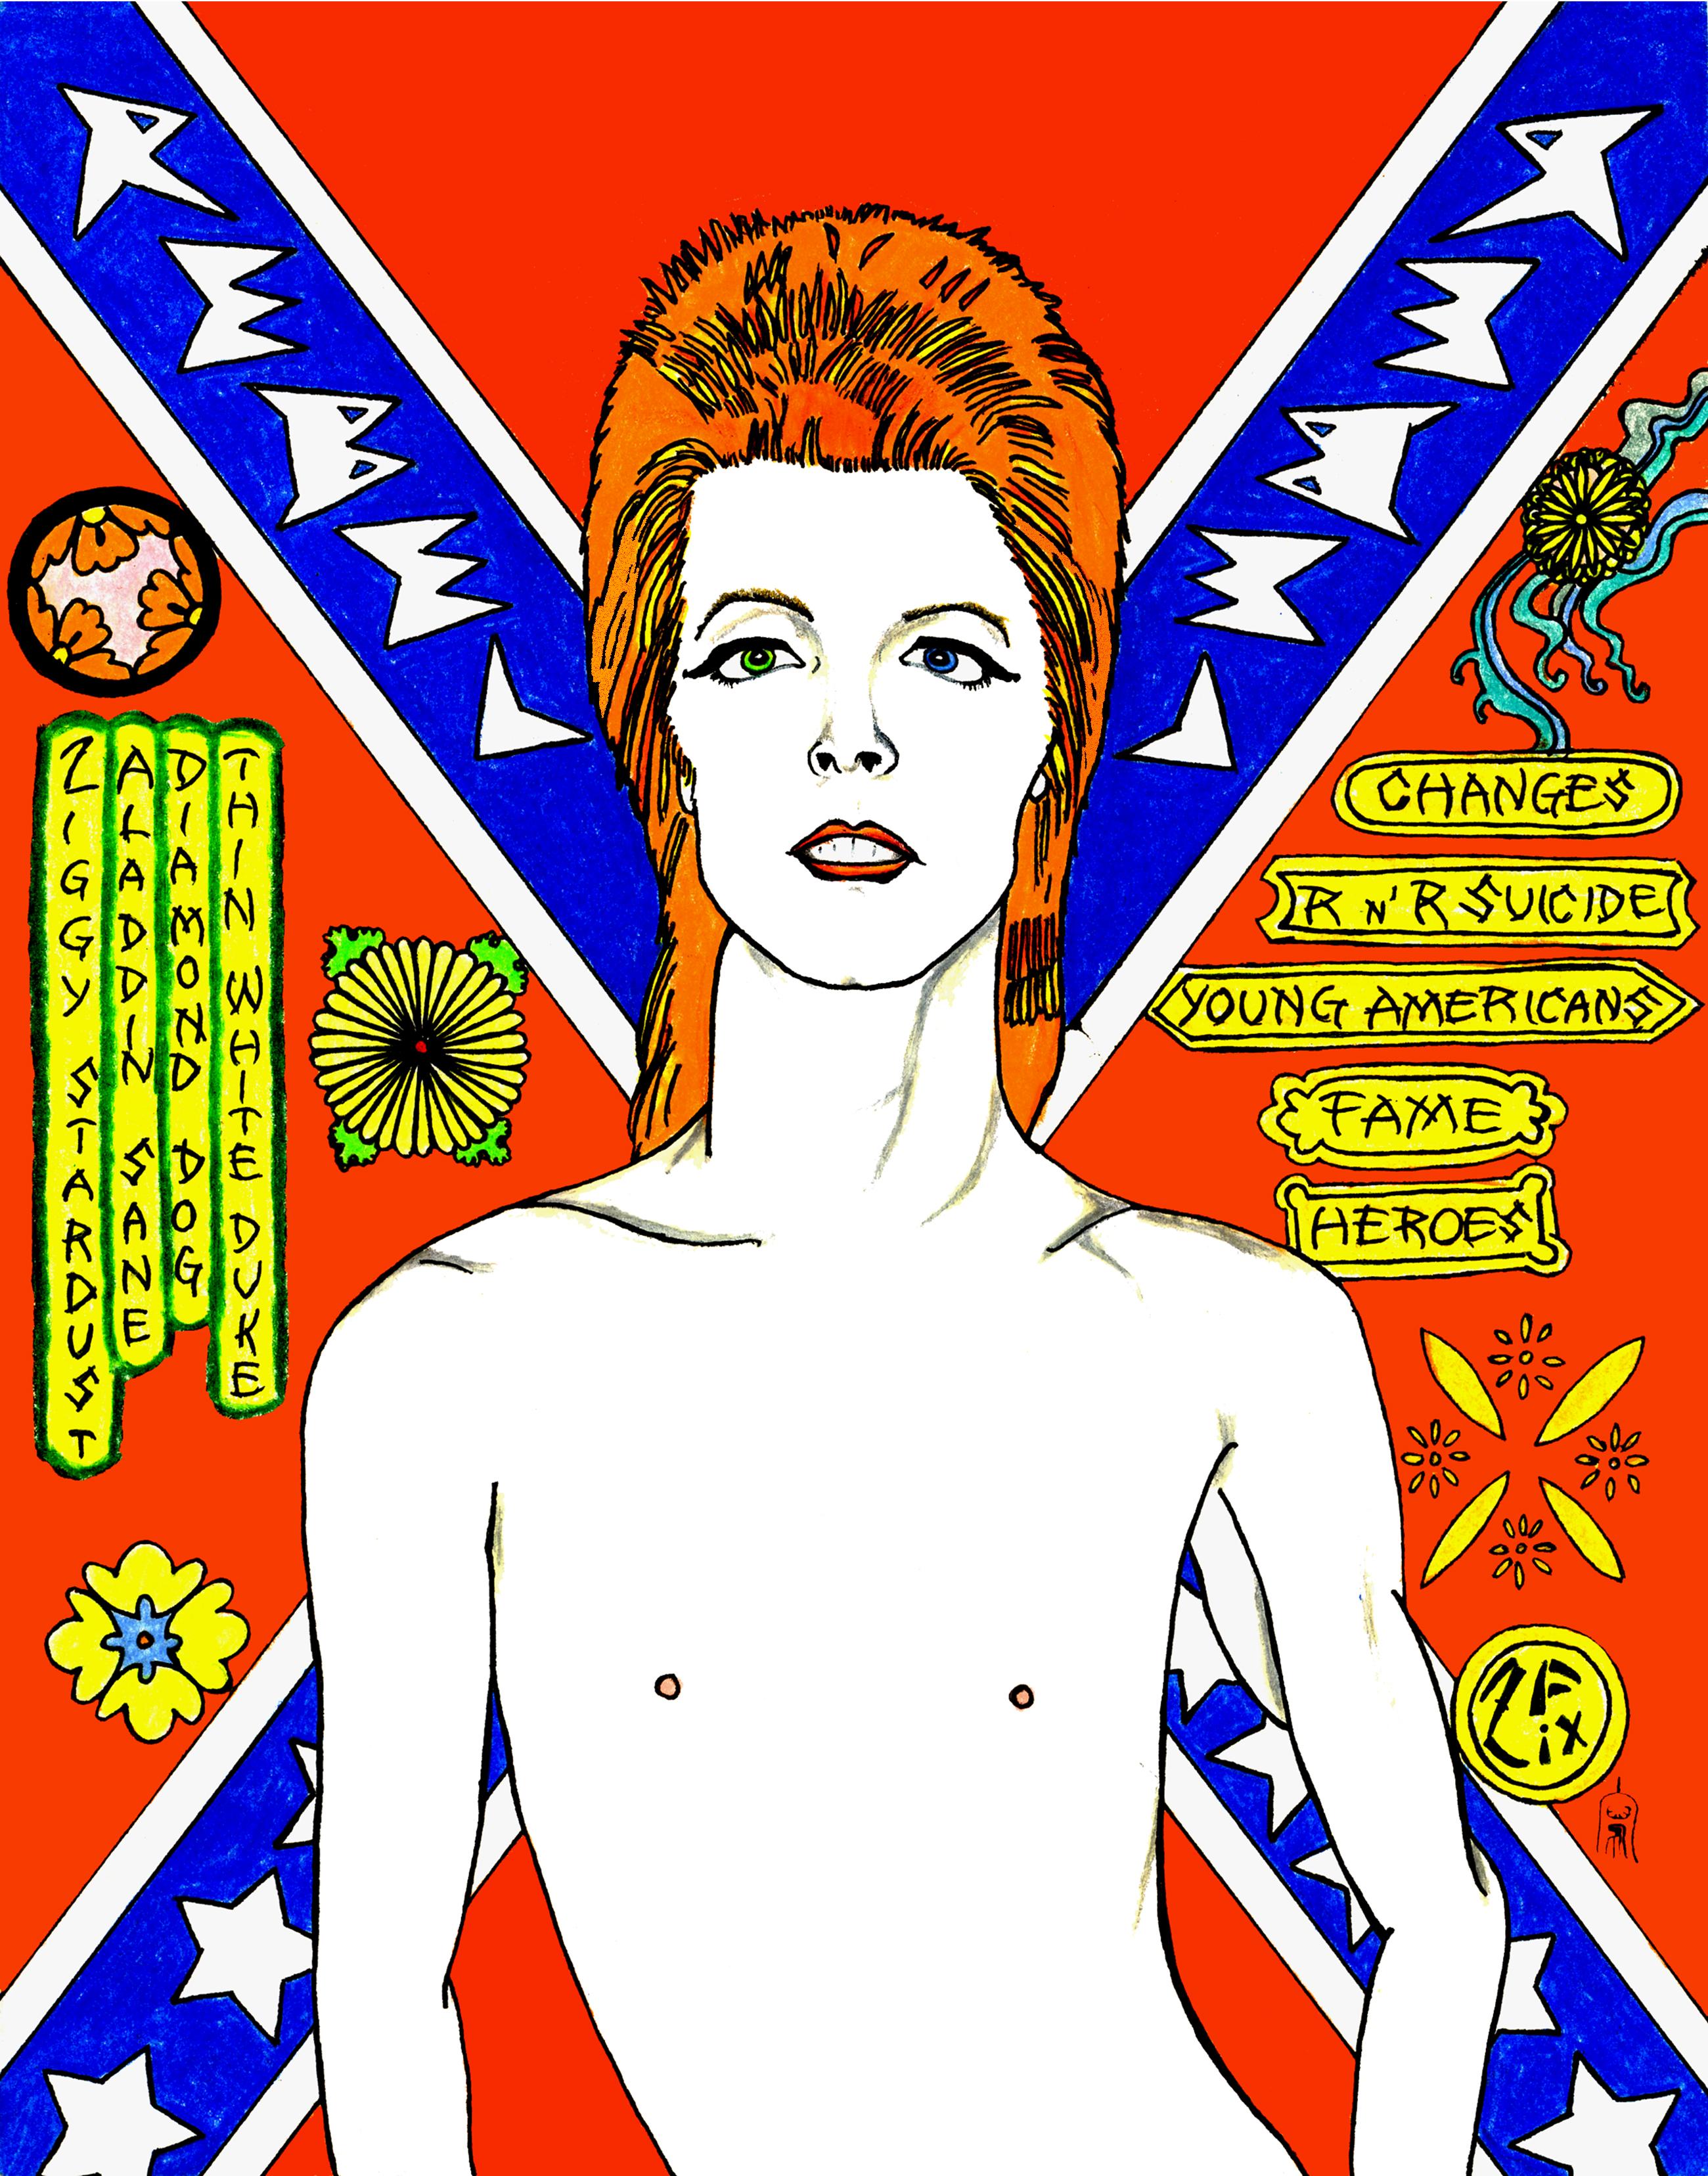 David Bowie Rebel Rebel in Blue - Print by Zane Fix